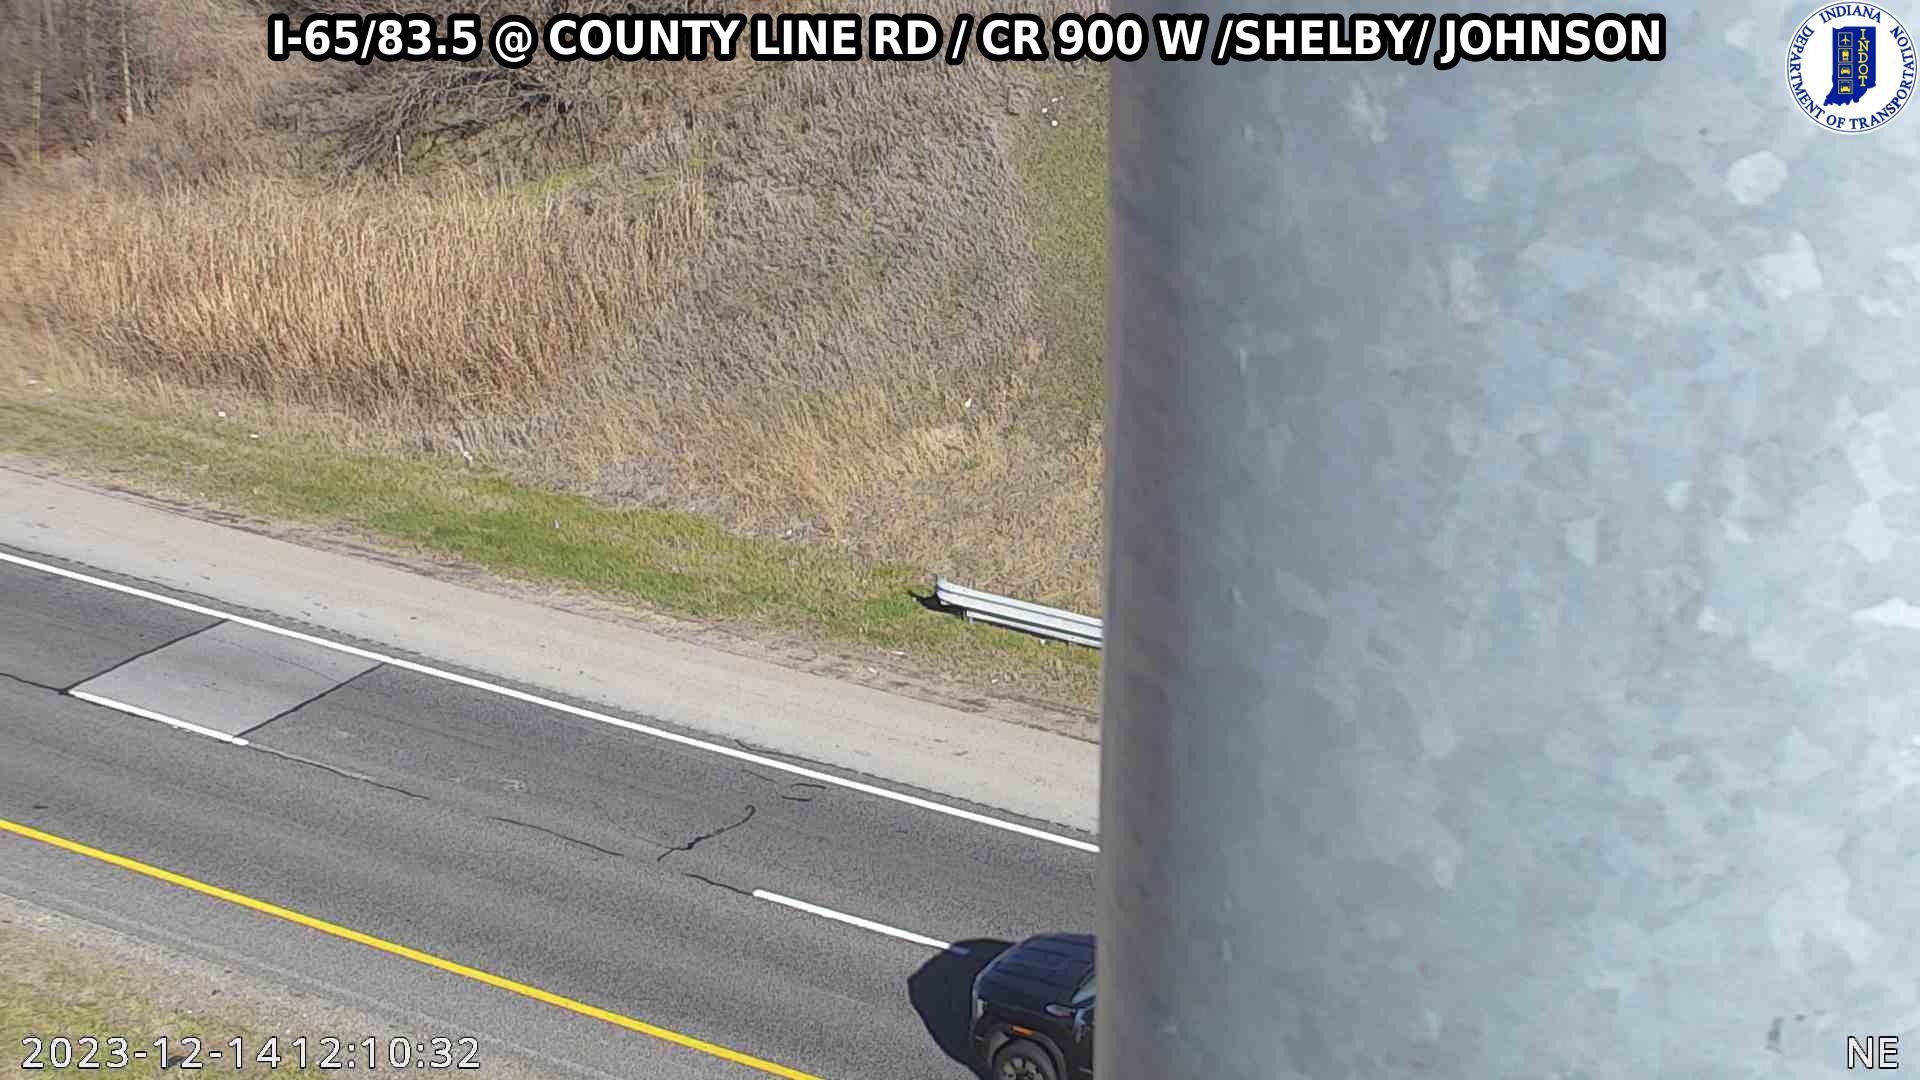 Amity: I-65: I-65/83.5 COUNTY RD 900 W - COUNTY LINE RD Traffic Camera